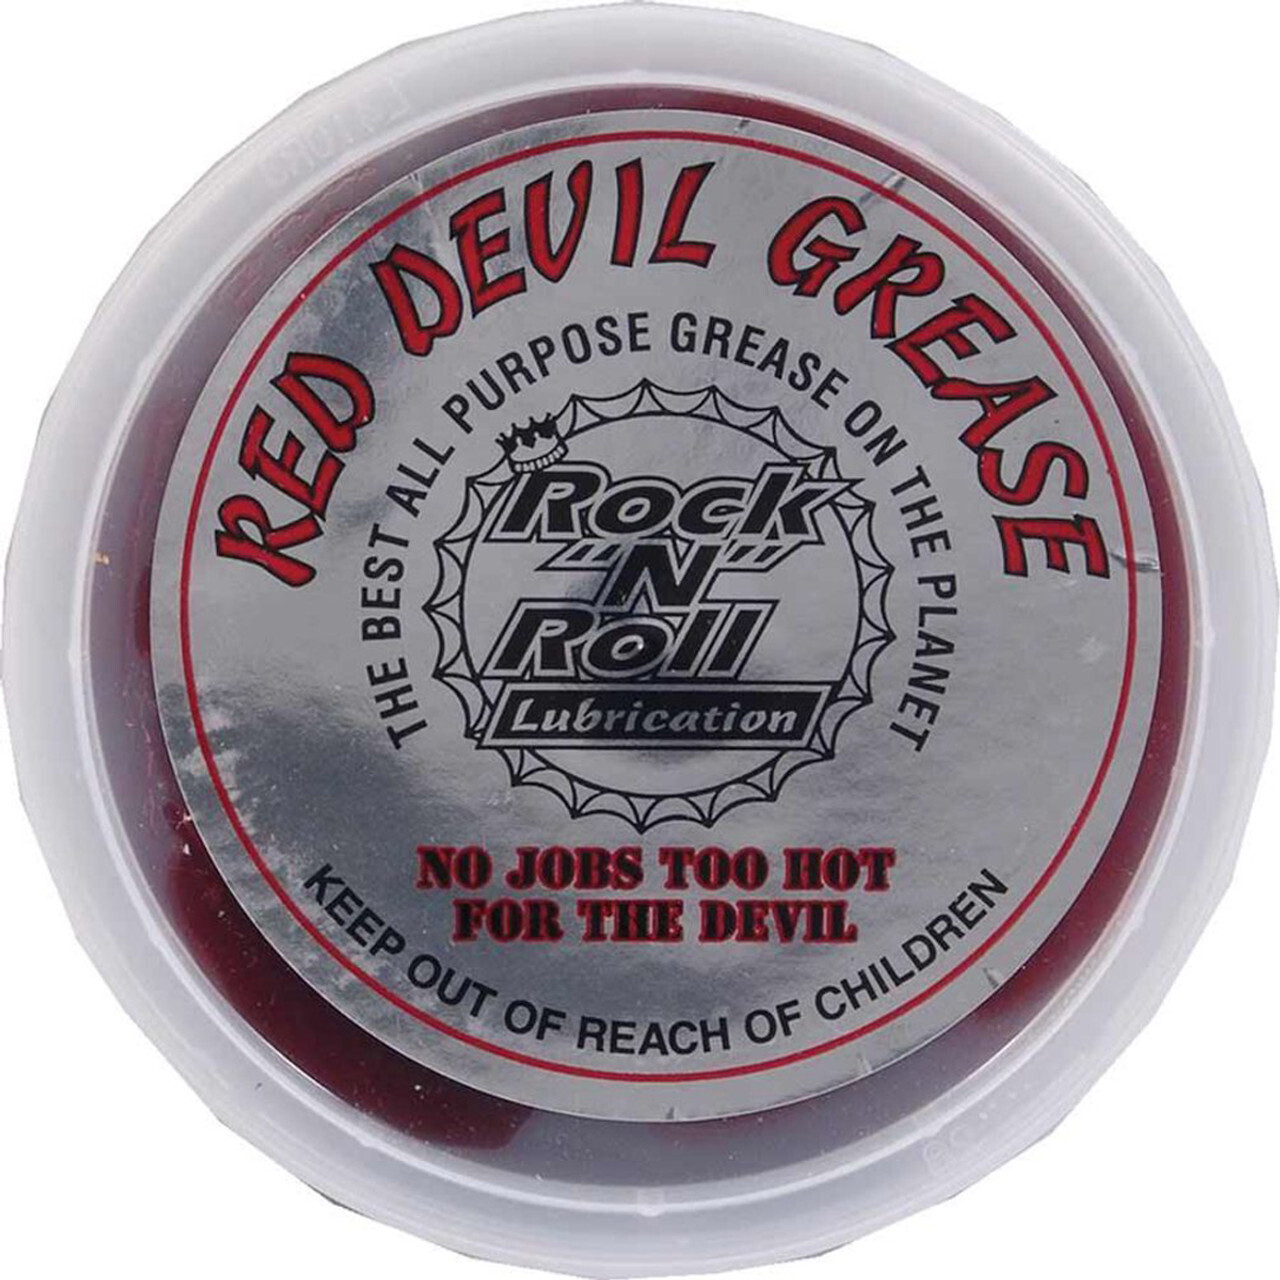 ROCK "N" ROLL RED DEVIL GREASE TUB